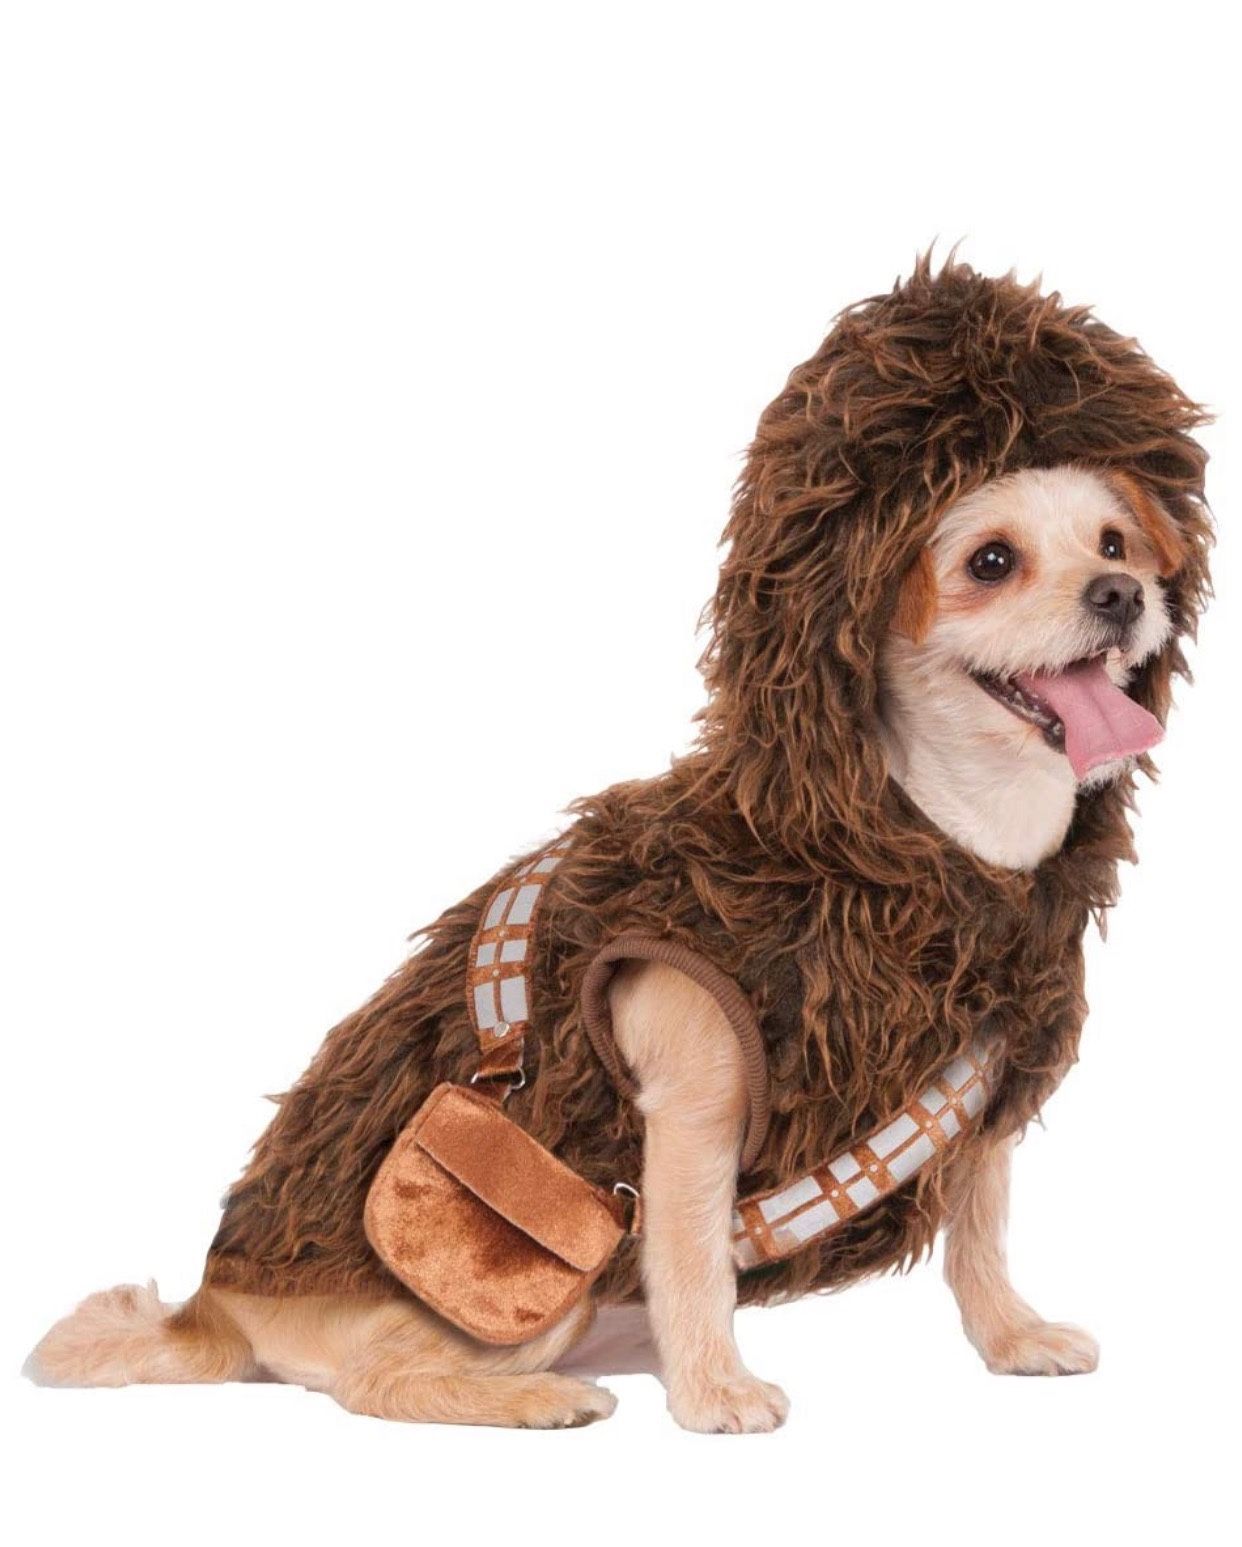 Star Wars dog costume size S